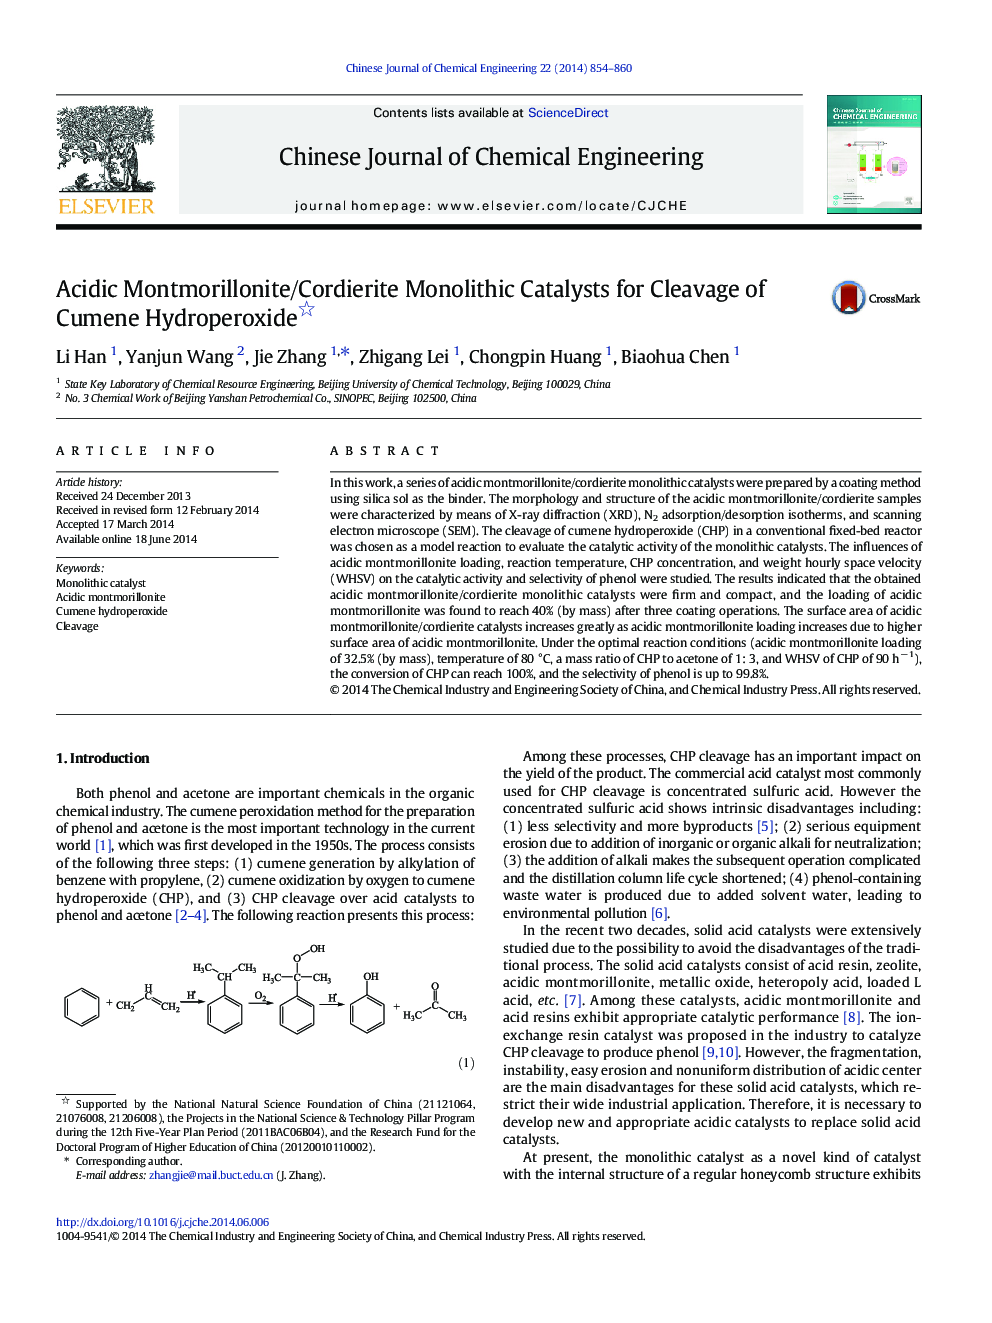 Acidic Montmorillonite/Cordierite Monolithic Catalysts for Cleavage of Cumene Hydroperoxide 